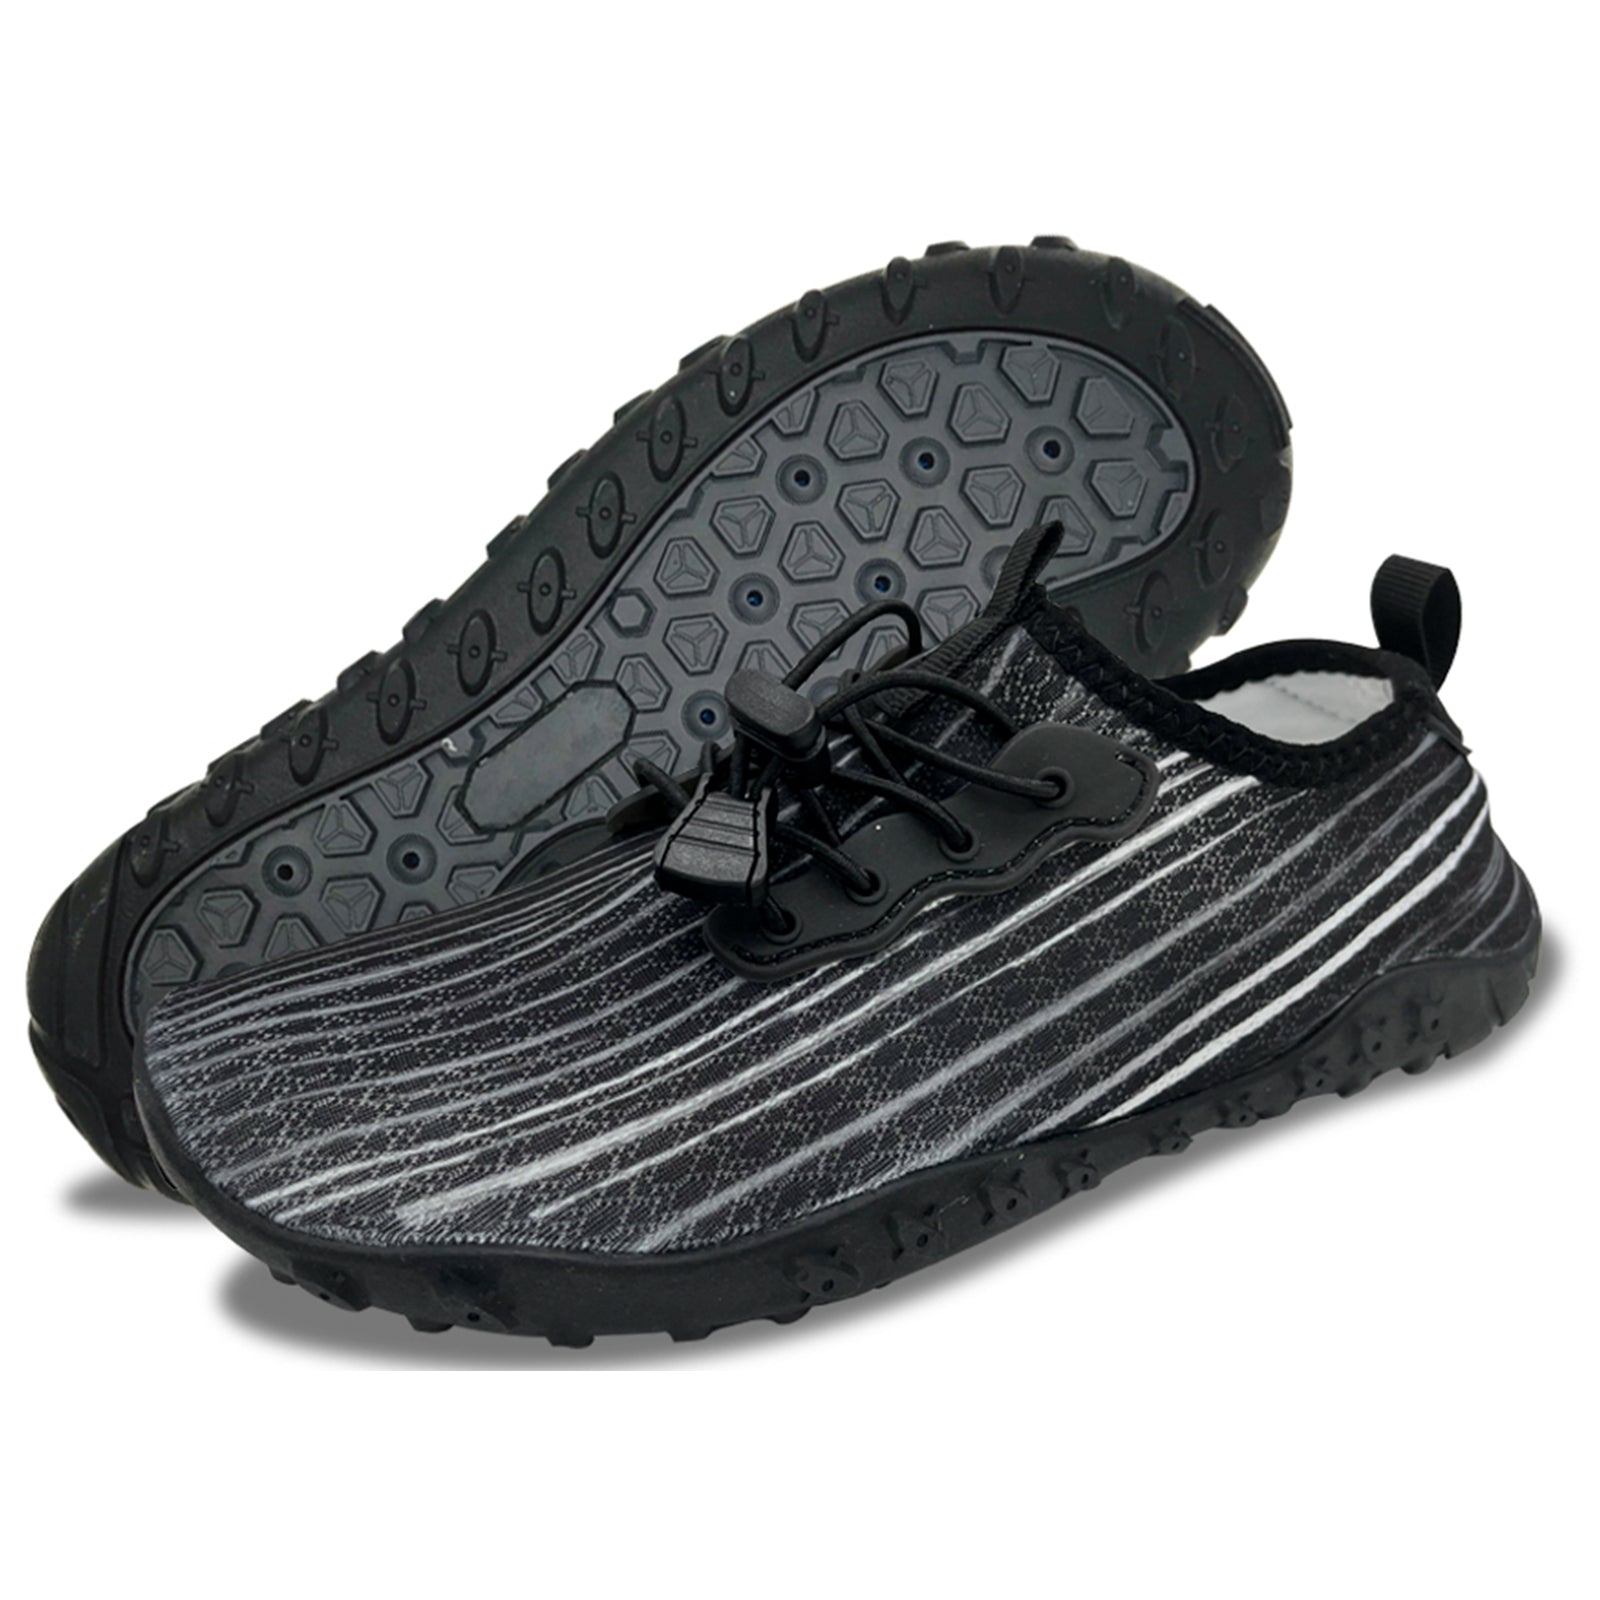 Water Shoes for Men and Women Soft Breathable Slip-on Aqua Shoes Aqua Socks for Swim Beach Pool Surf Yoga (Black Size US 12)